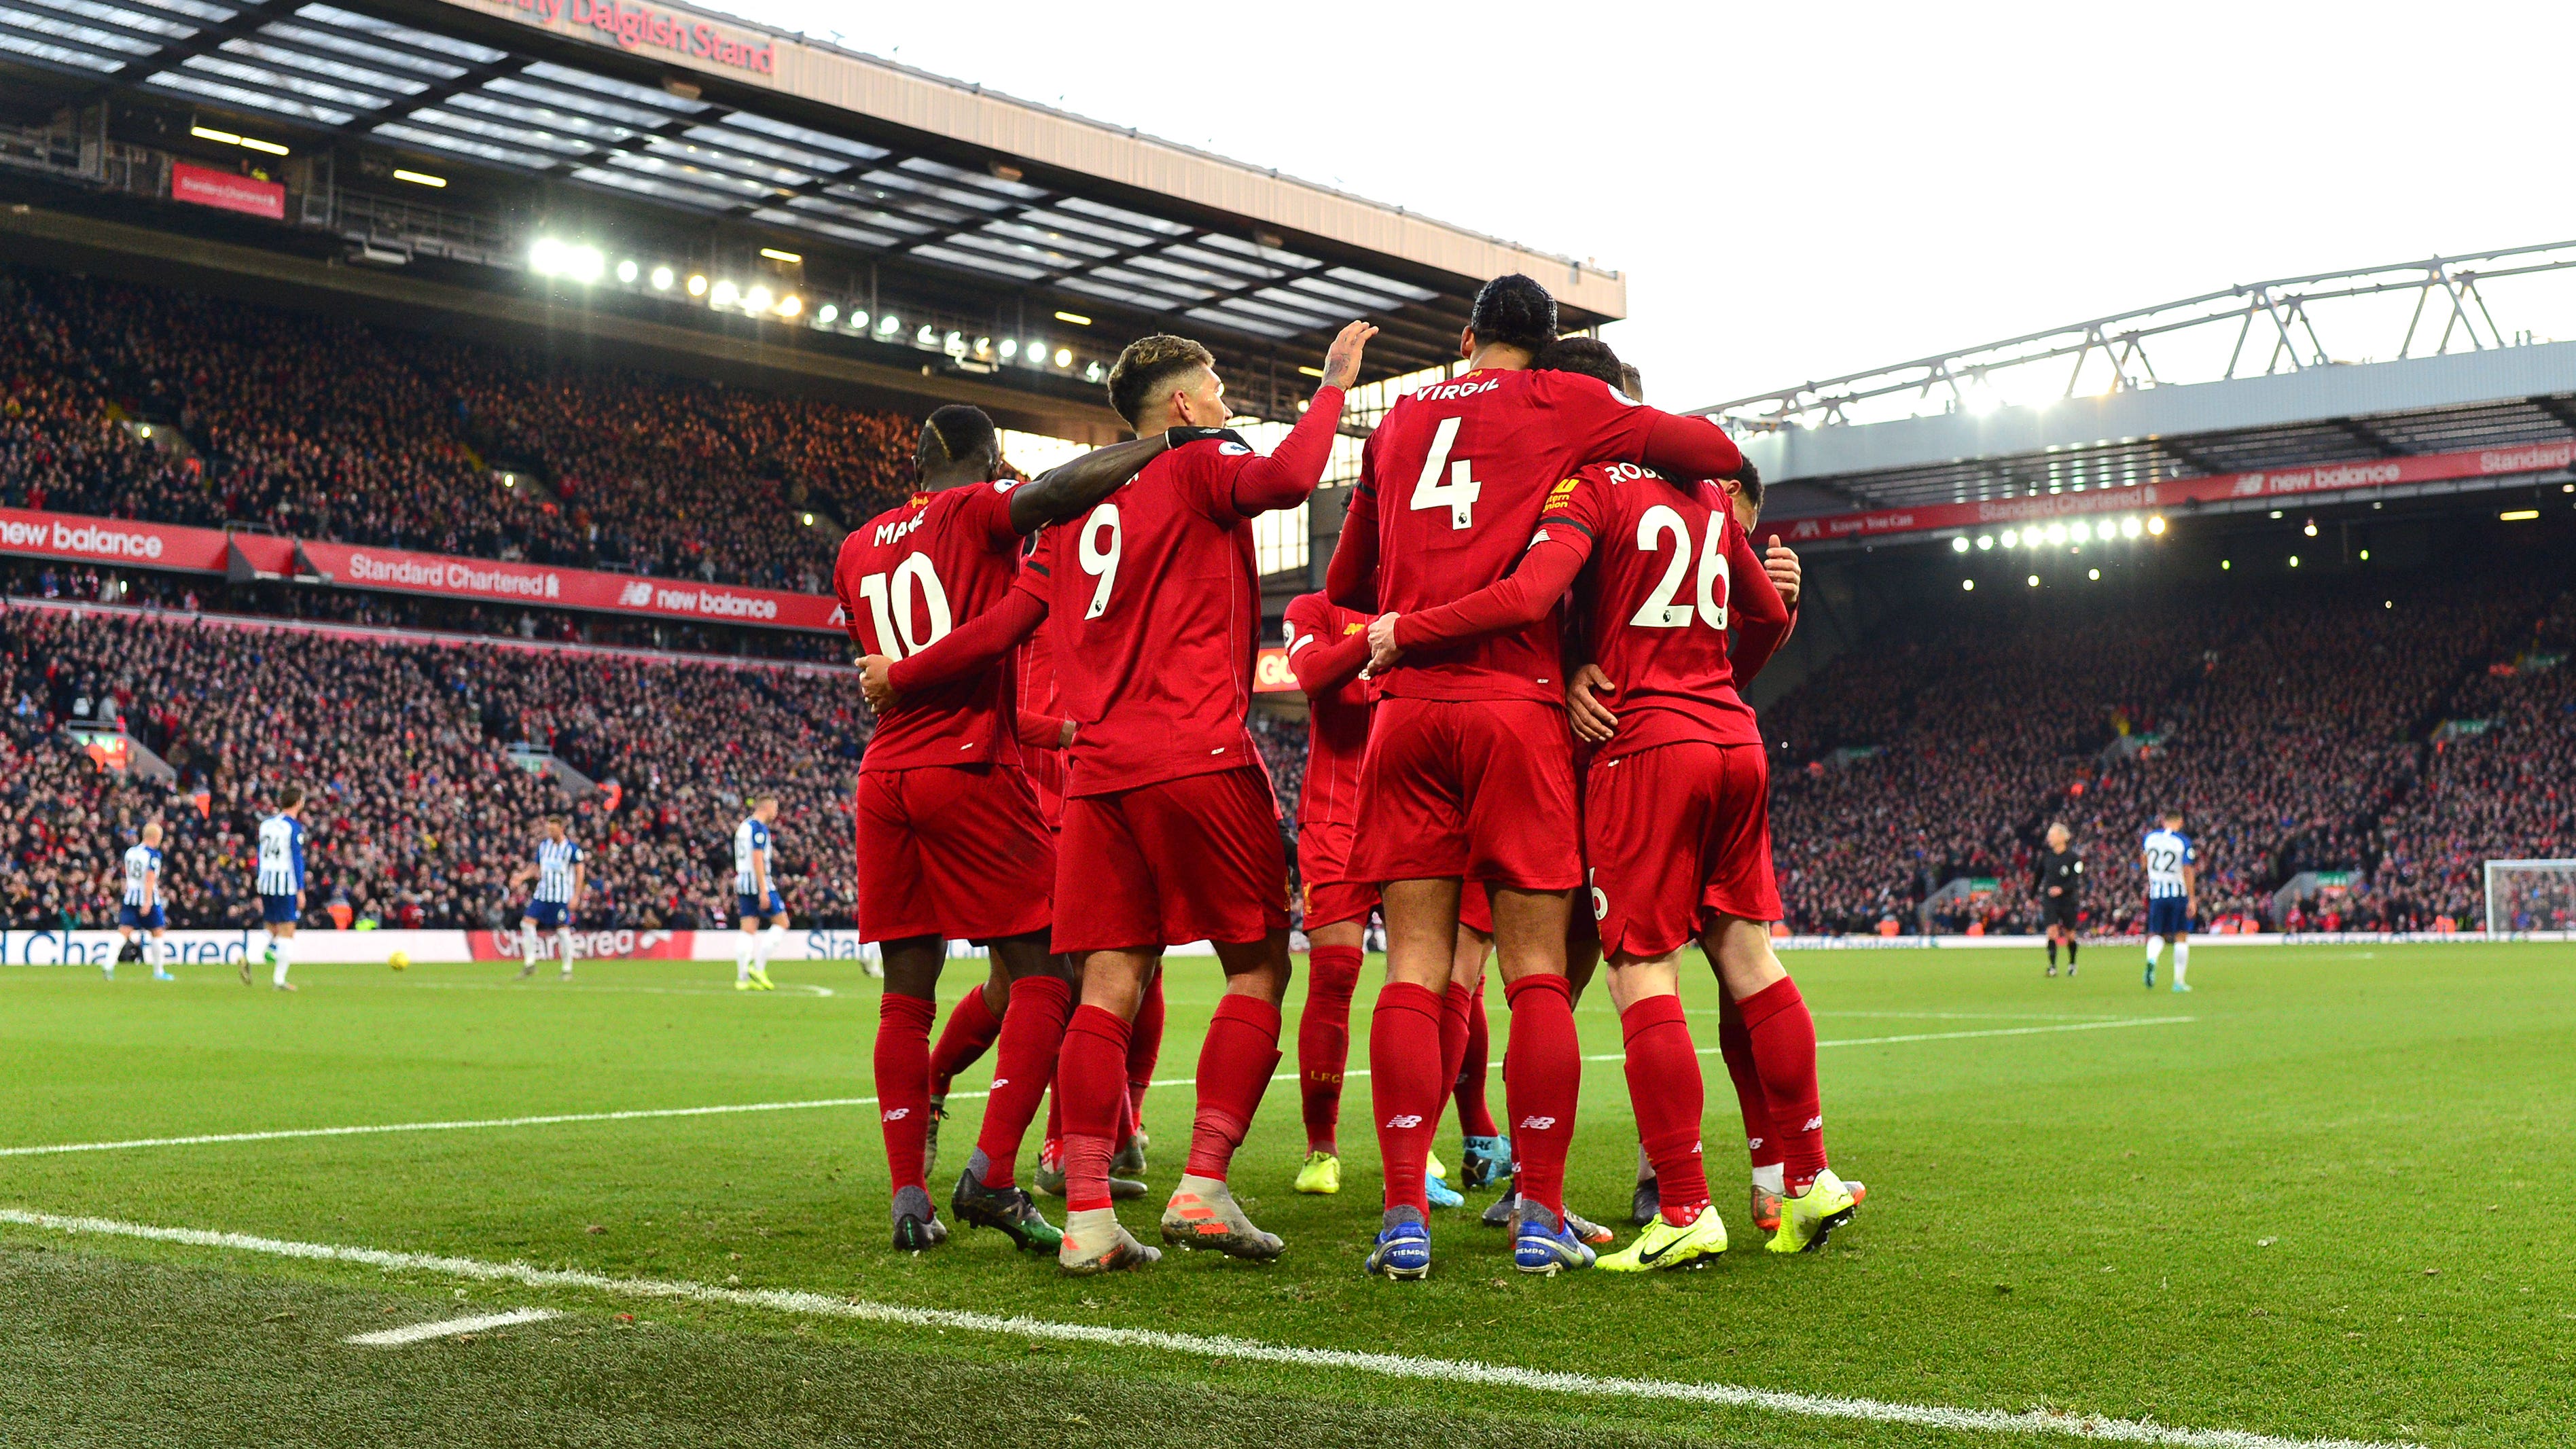 The key games of Liverpool’s titlewinning season BT Sport